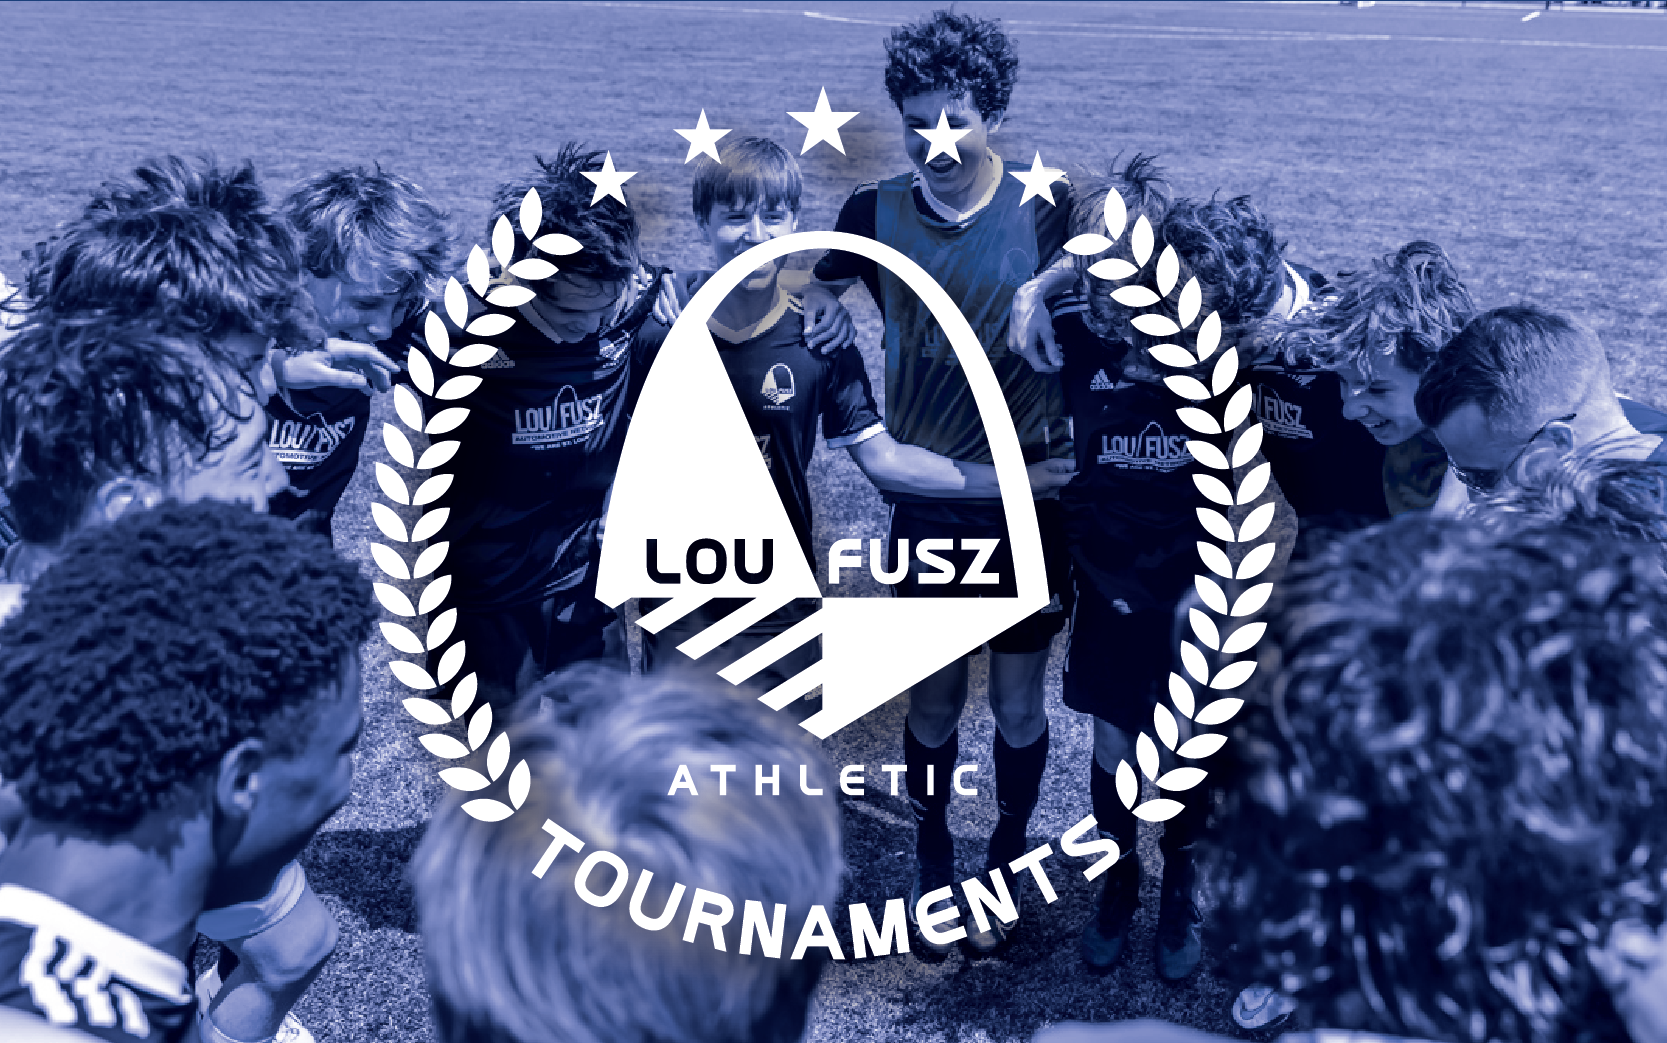 Lou Fusz Athletics Tournaments